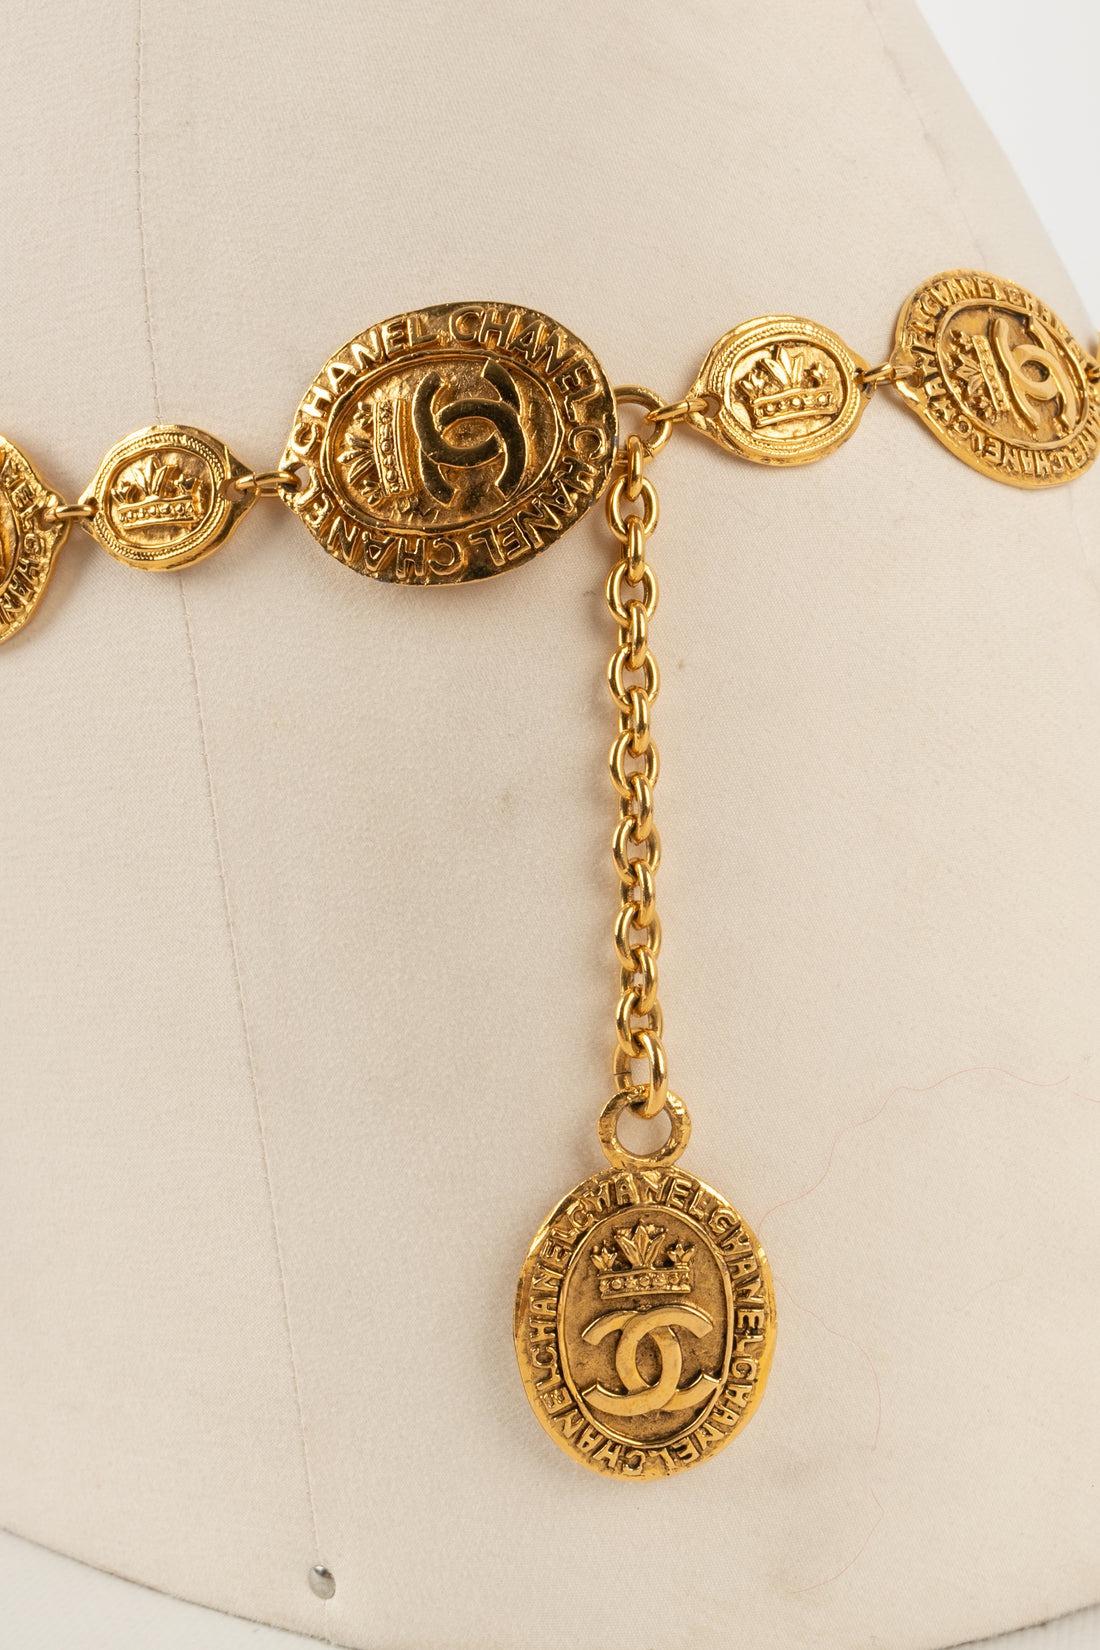 Chanel Golden Metal Belt with Engraved Medallions, 1980s 1